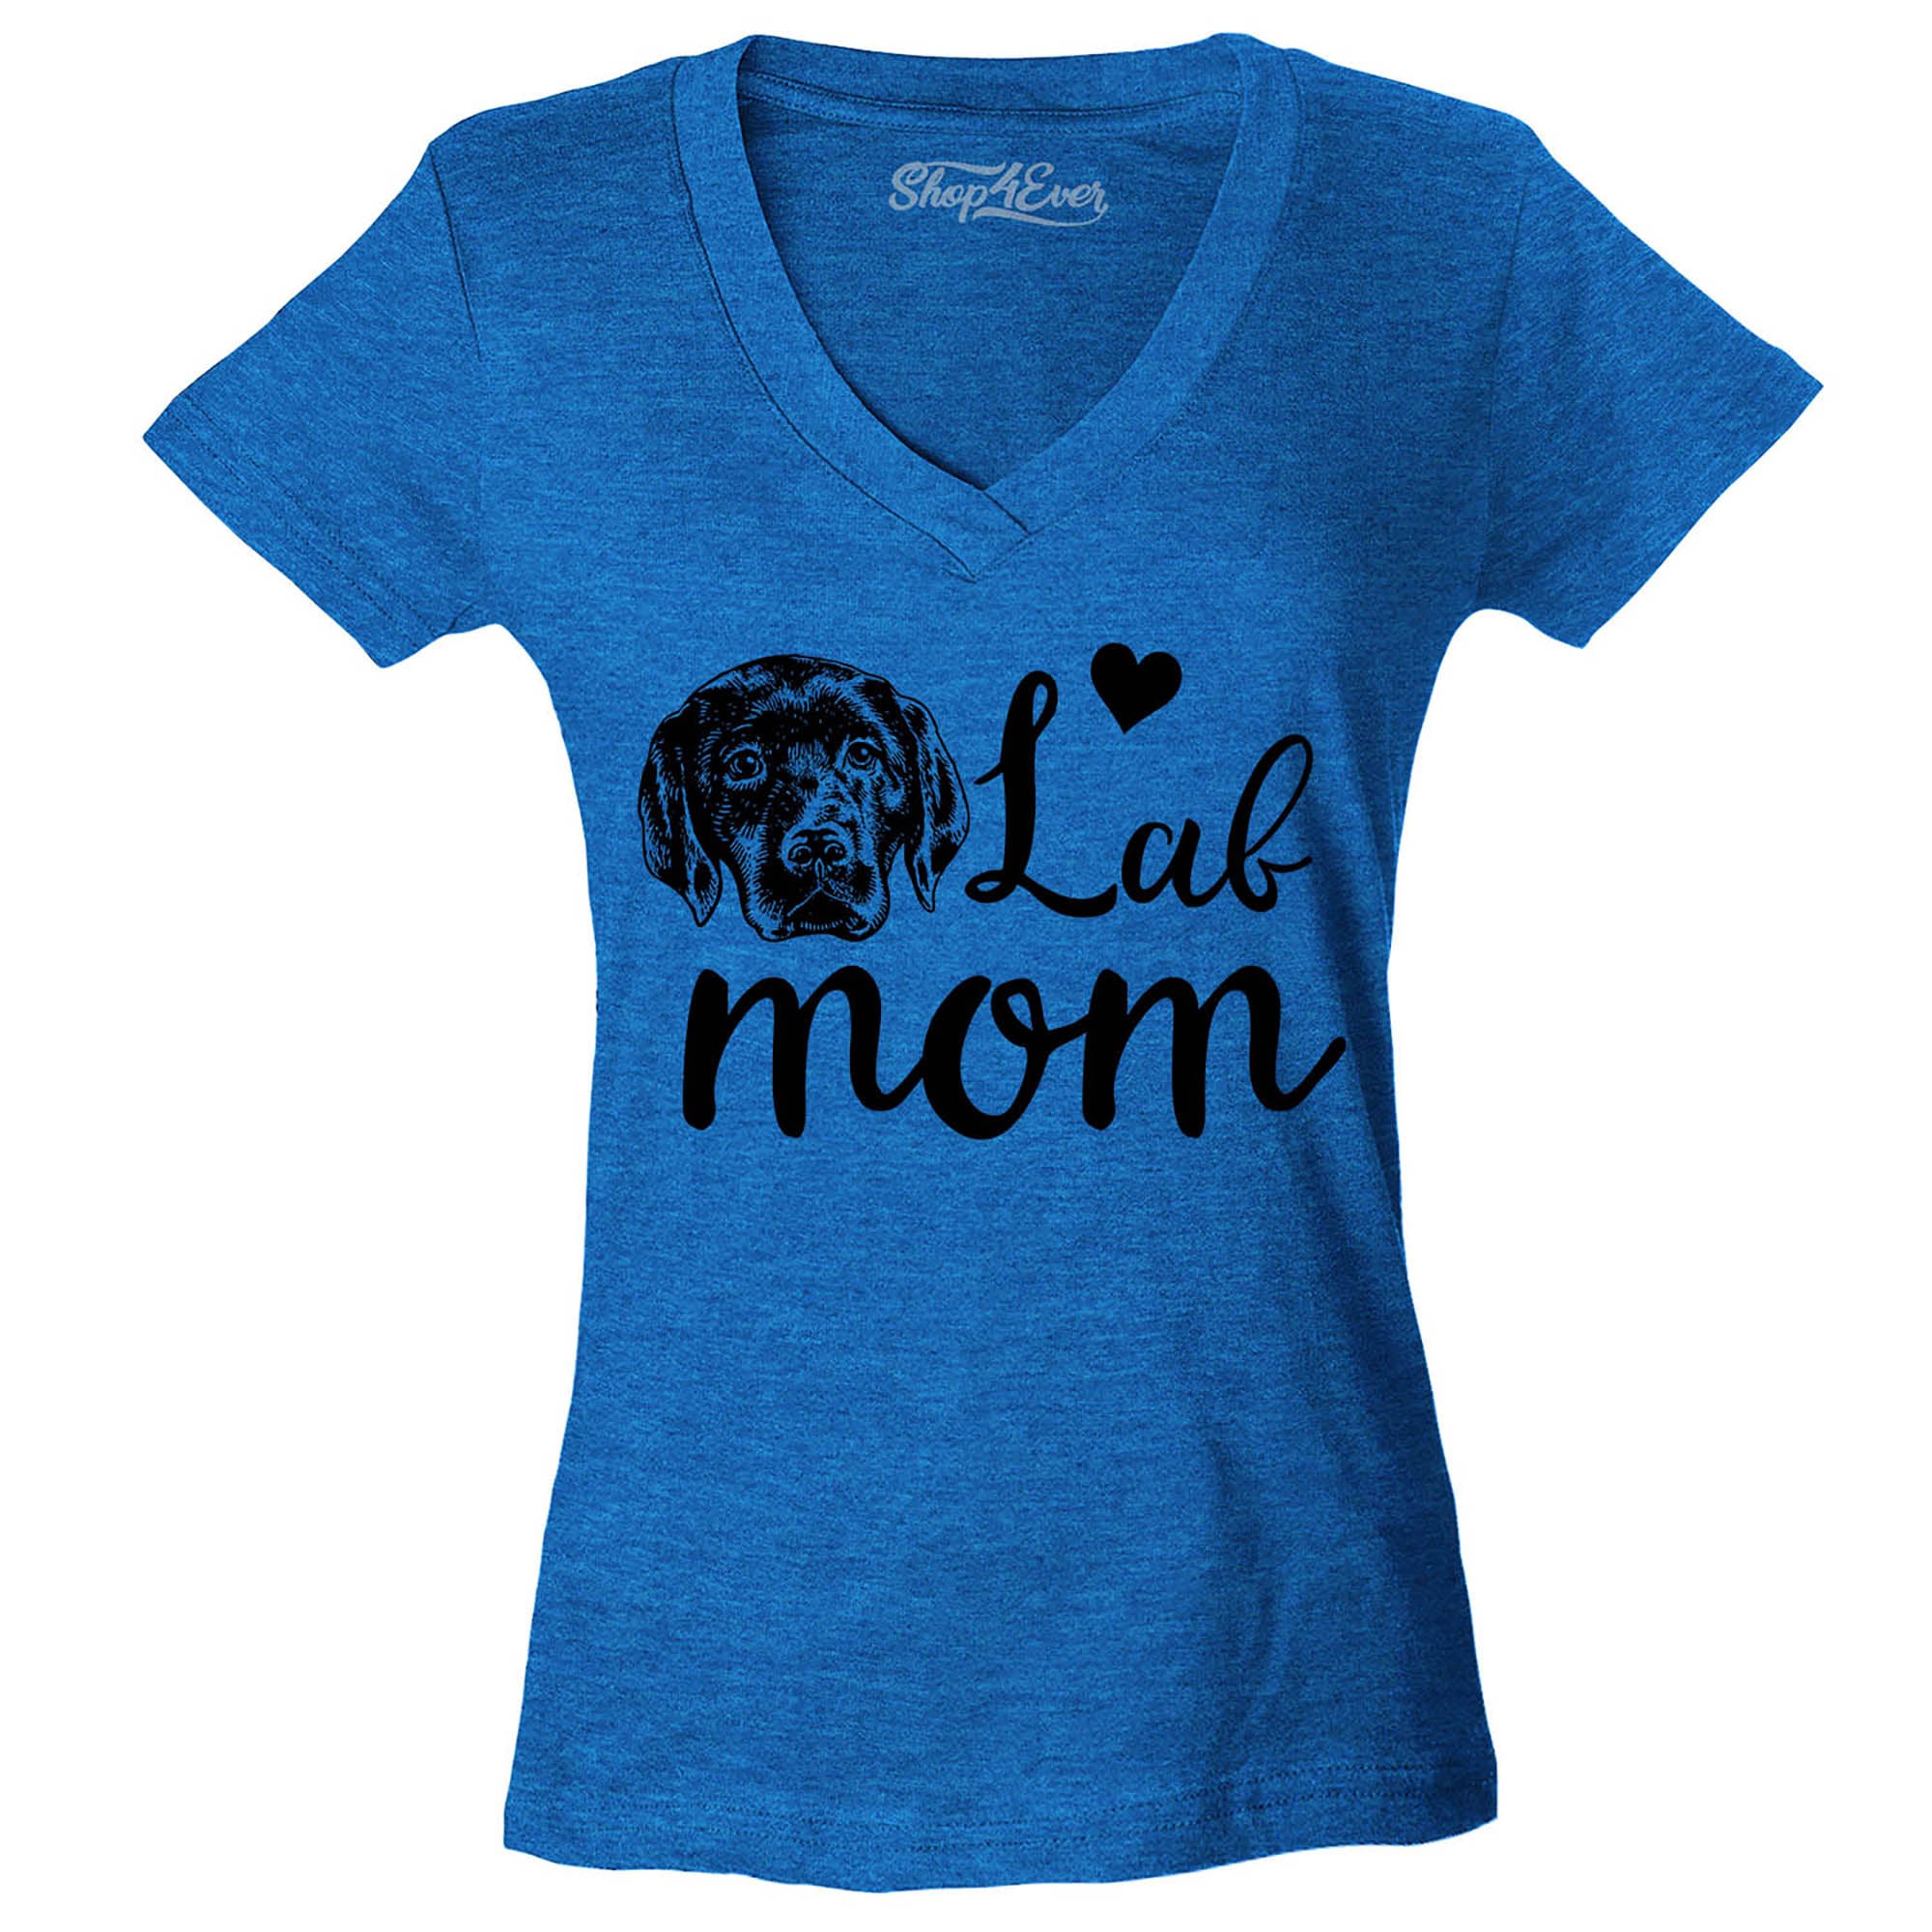 Black Lab Mom Women's V-Neck T-Shirt Slim Fit